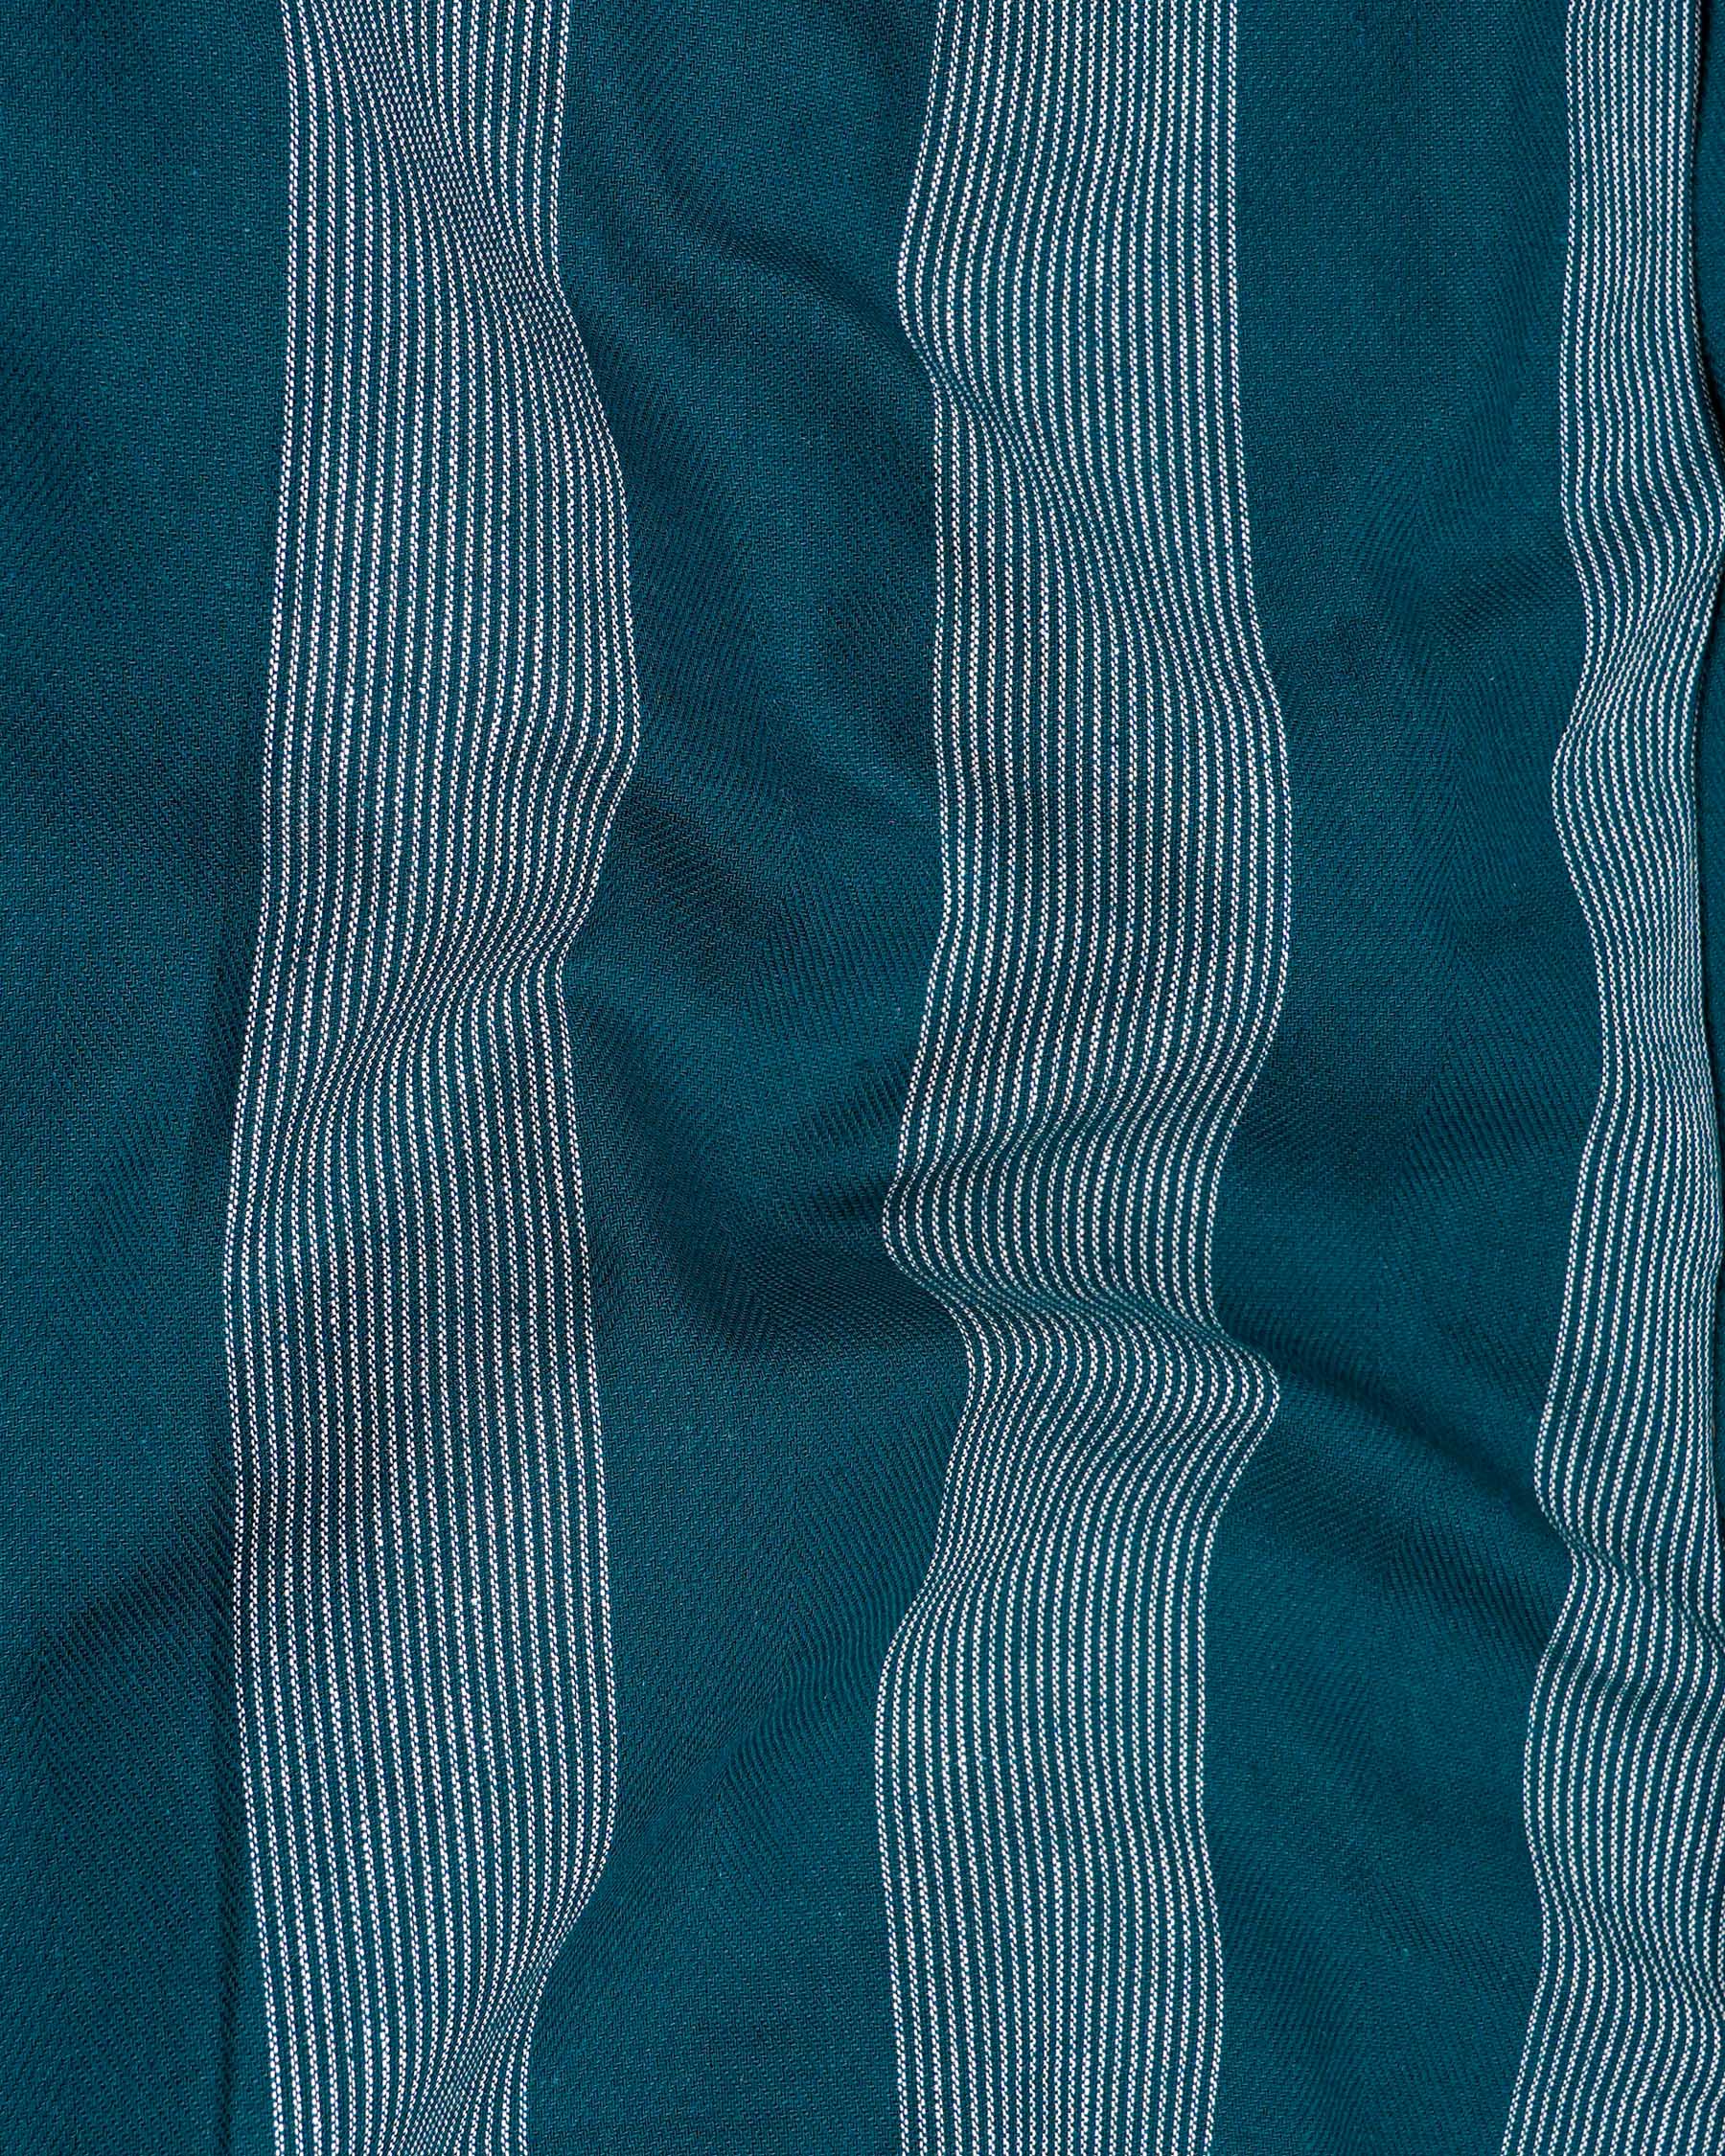 Cyprus Sea Blue with Bright White Striped Herringbone Premium Cotton Shirt 7951-BD-38,7951-BD-H-38,7951-BD-39,7951-BD-H-39,7951-BD-40,7951-BD-H-40,7951-BD-42,7951-BD-H-42,7951-BD-44,7951-BD-H-44,7951-BD-46,7951-BD-H-46,7951-BD-48,7951-BD-H-48,7951-BD-50,7951-BD-H-50,7951-BD-52,7951-BD-H-52